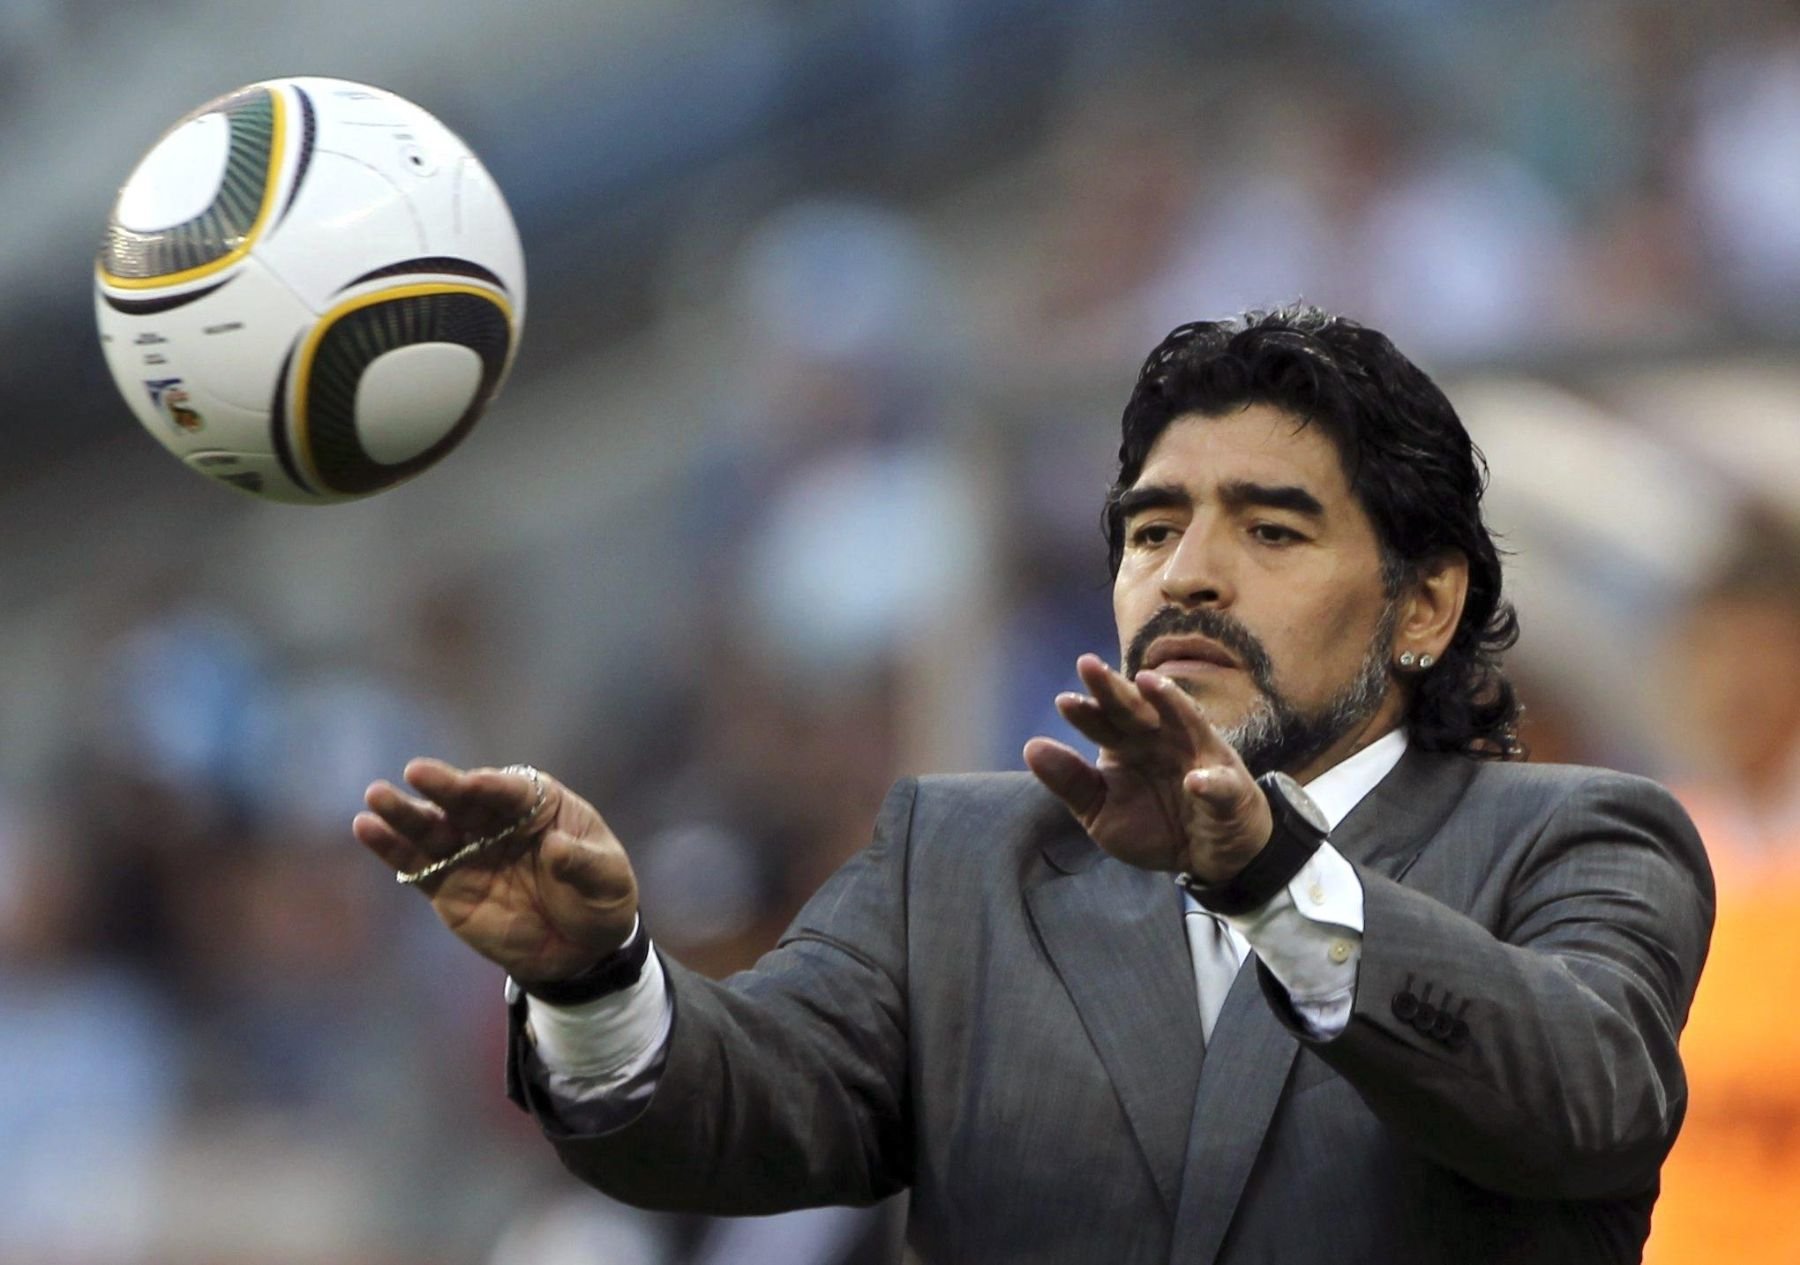 Марадона сыграл в футбол с Мадуро